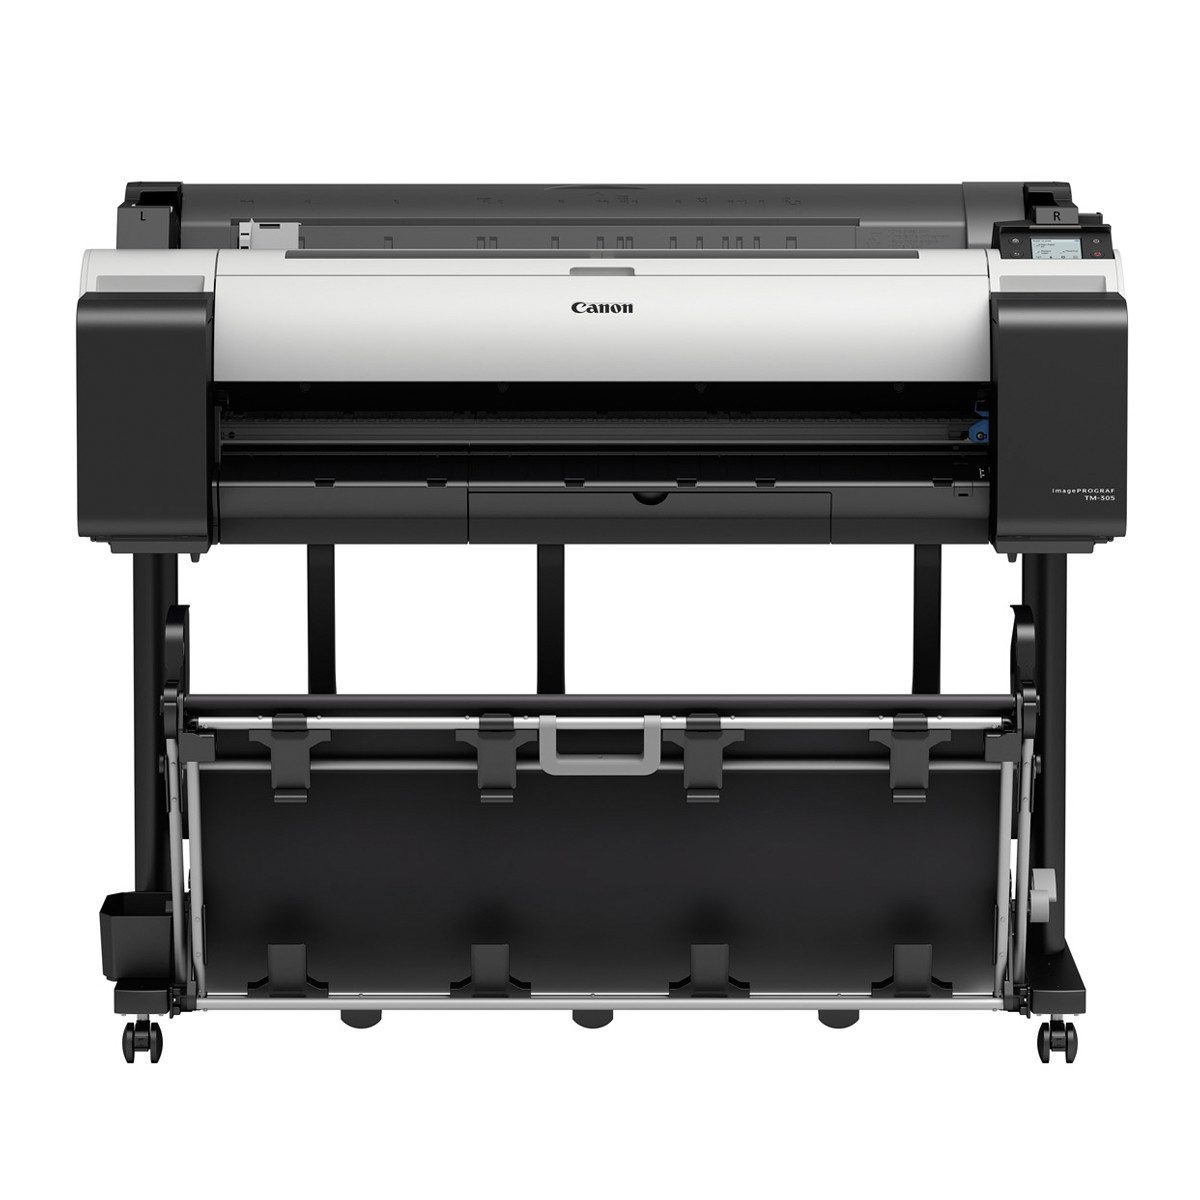 Canon imagepro TM305 Printer